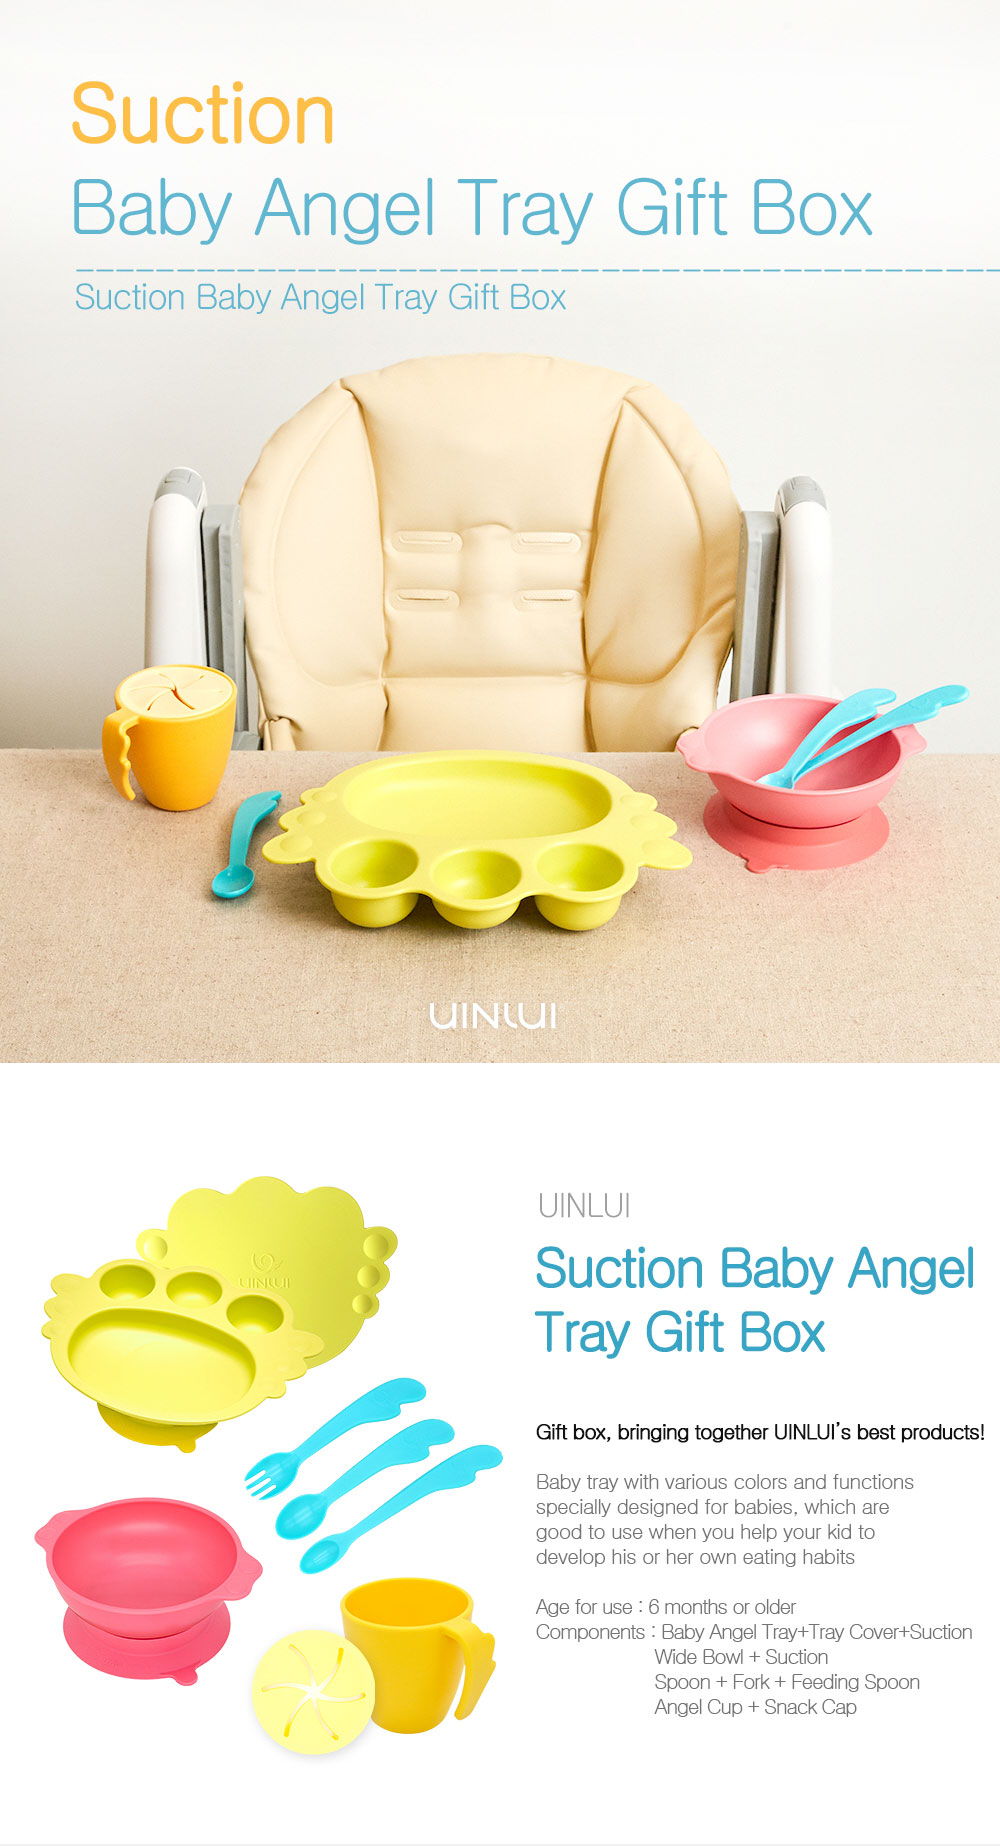 Suction Baby Angel Tray Gift Box